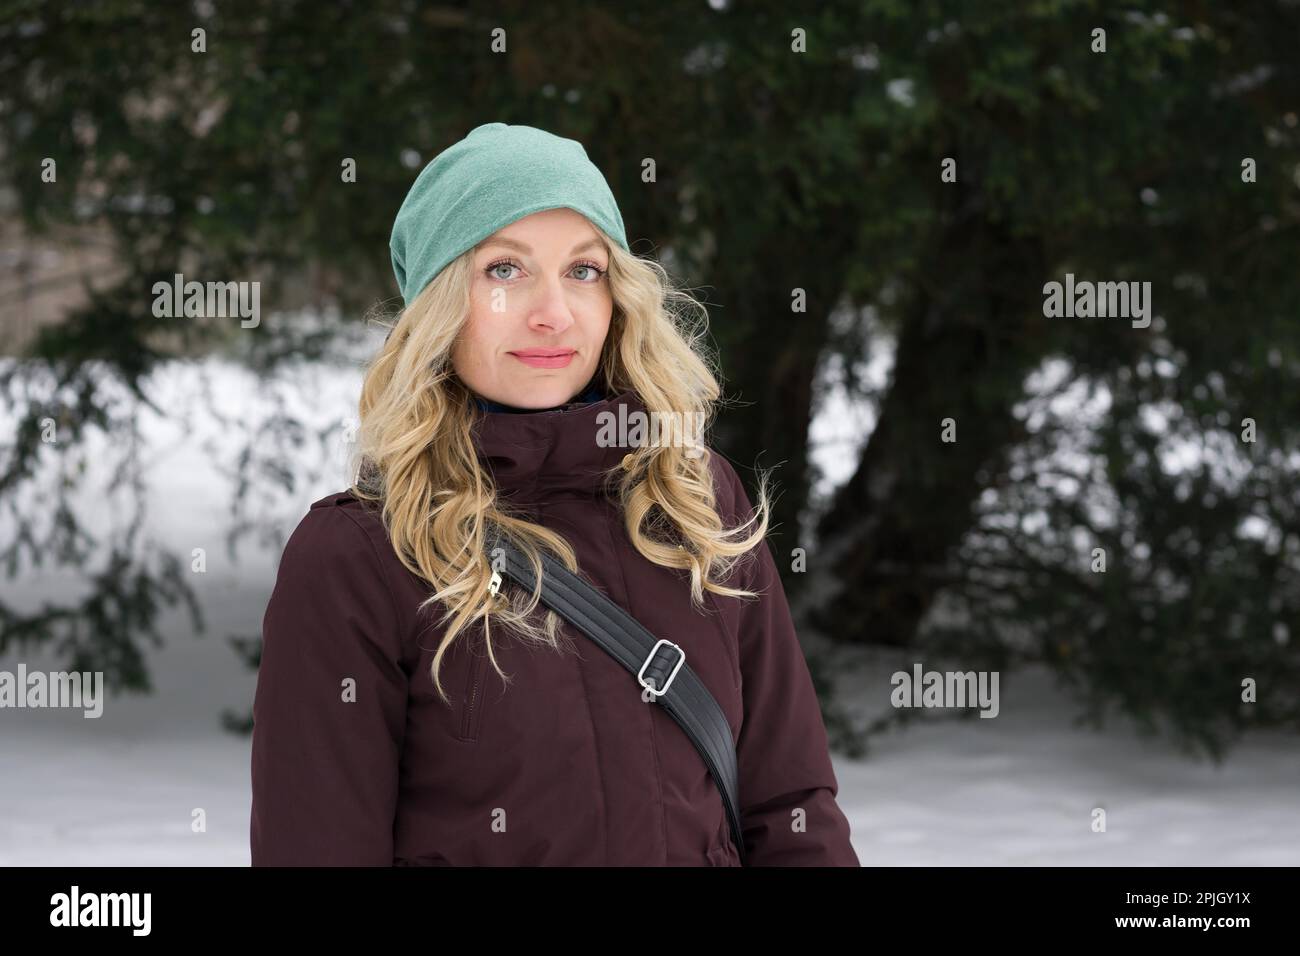 blond woman wearing warm winter fashion and woolen hat Stock Photo